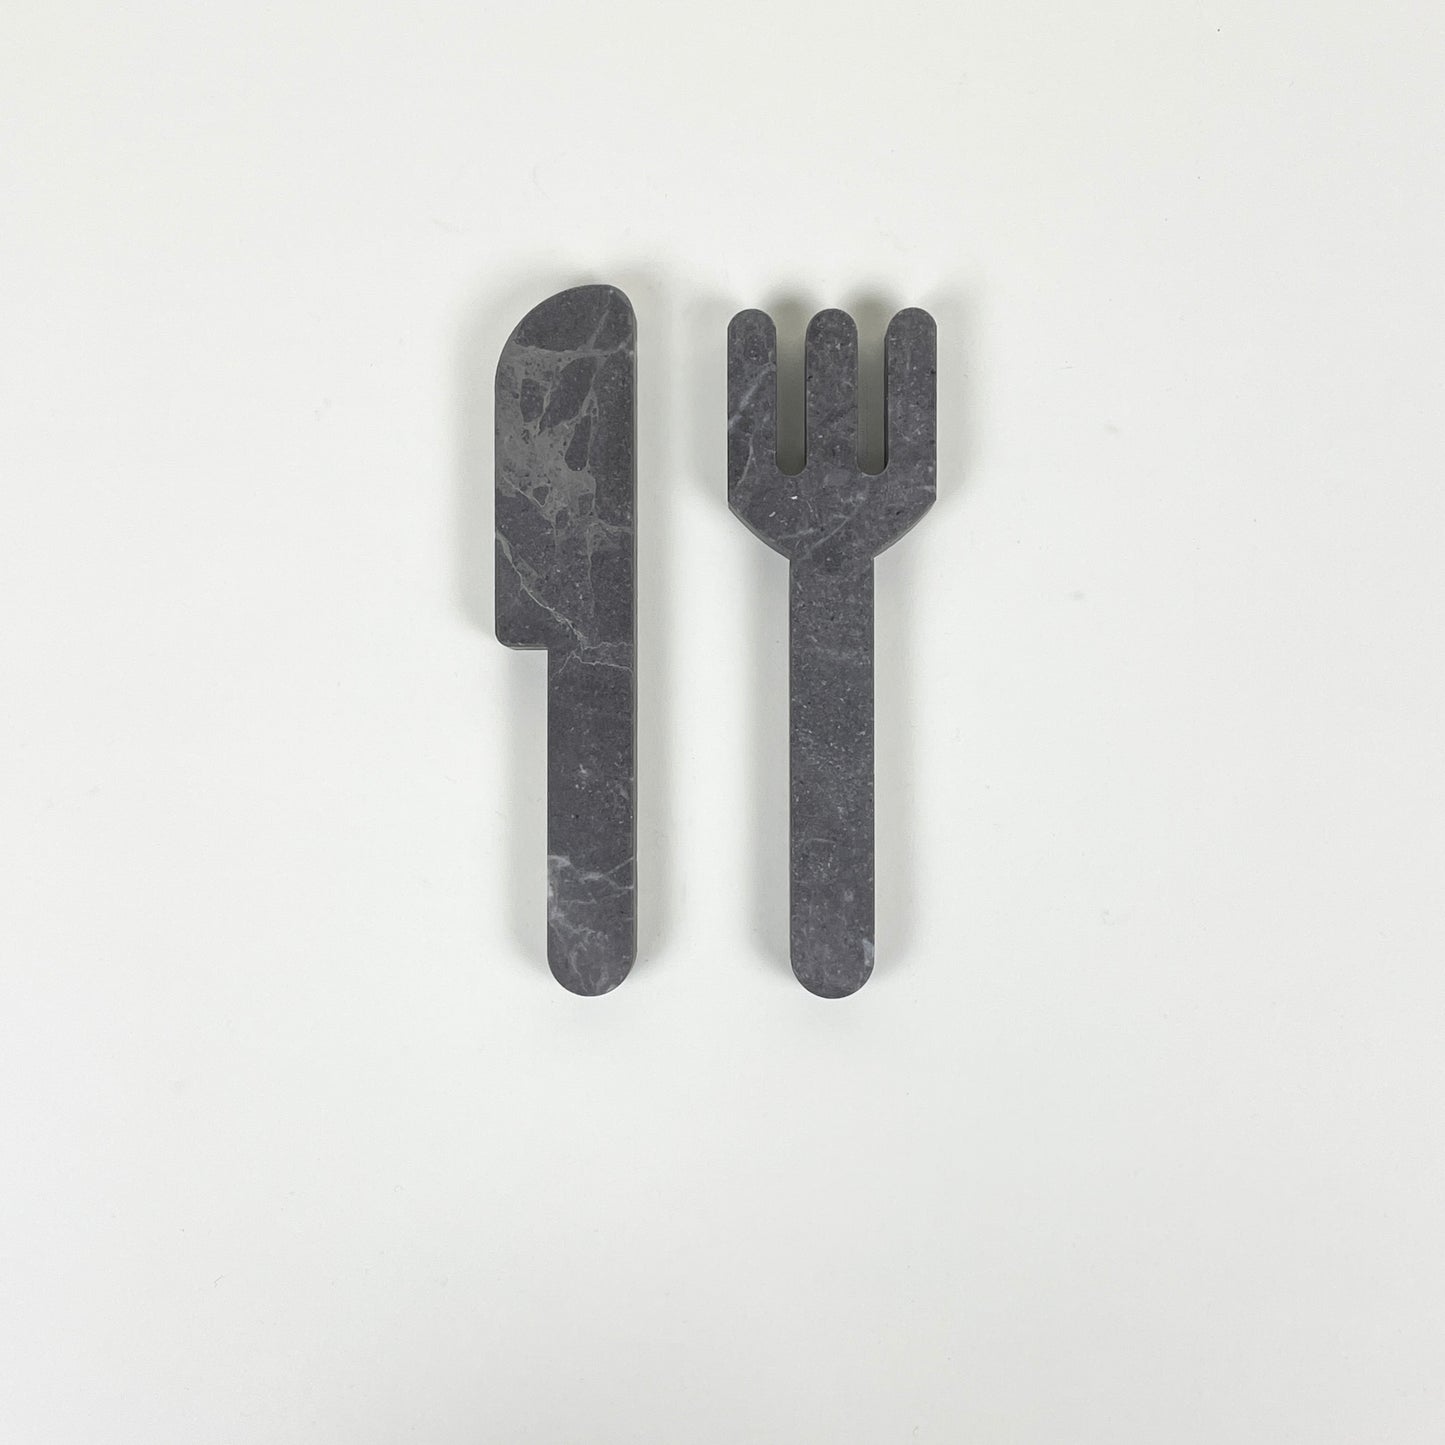 Marble cutlery by Public Studio, dark grey